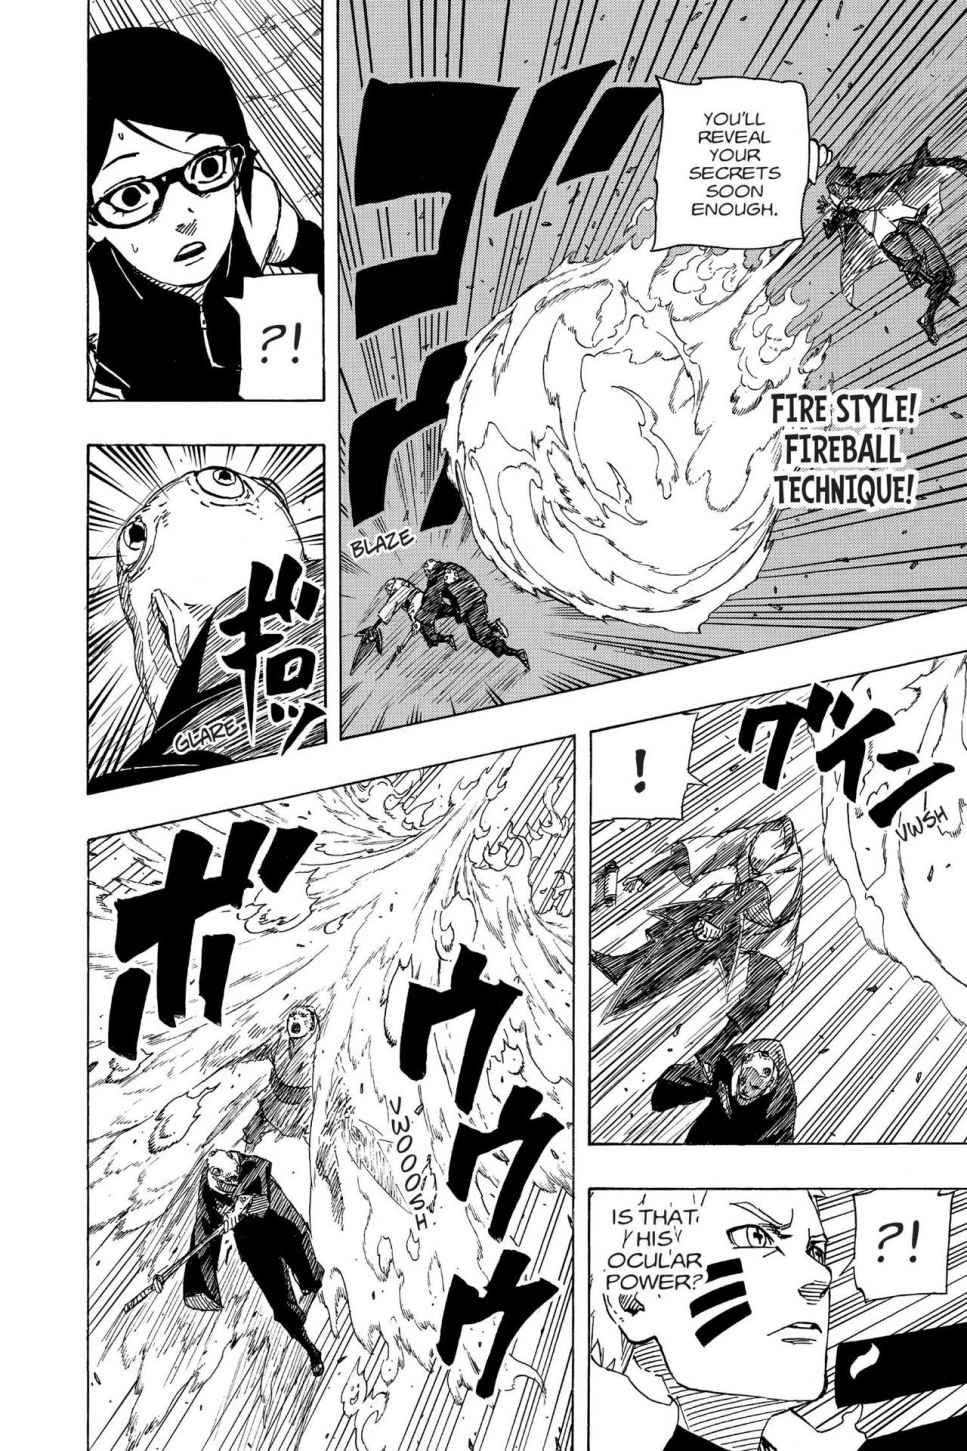 Sakura (Boruto) vs Naruto (Boruto/Sem Kurama)  - Página 6 0006-004